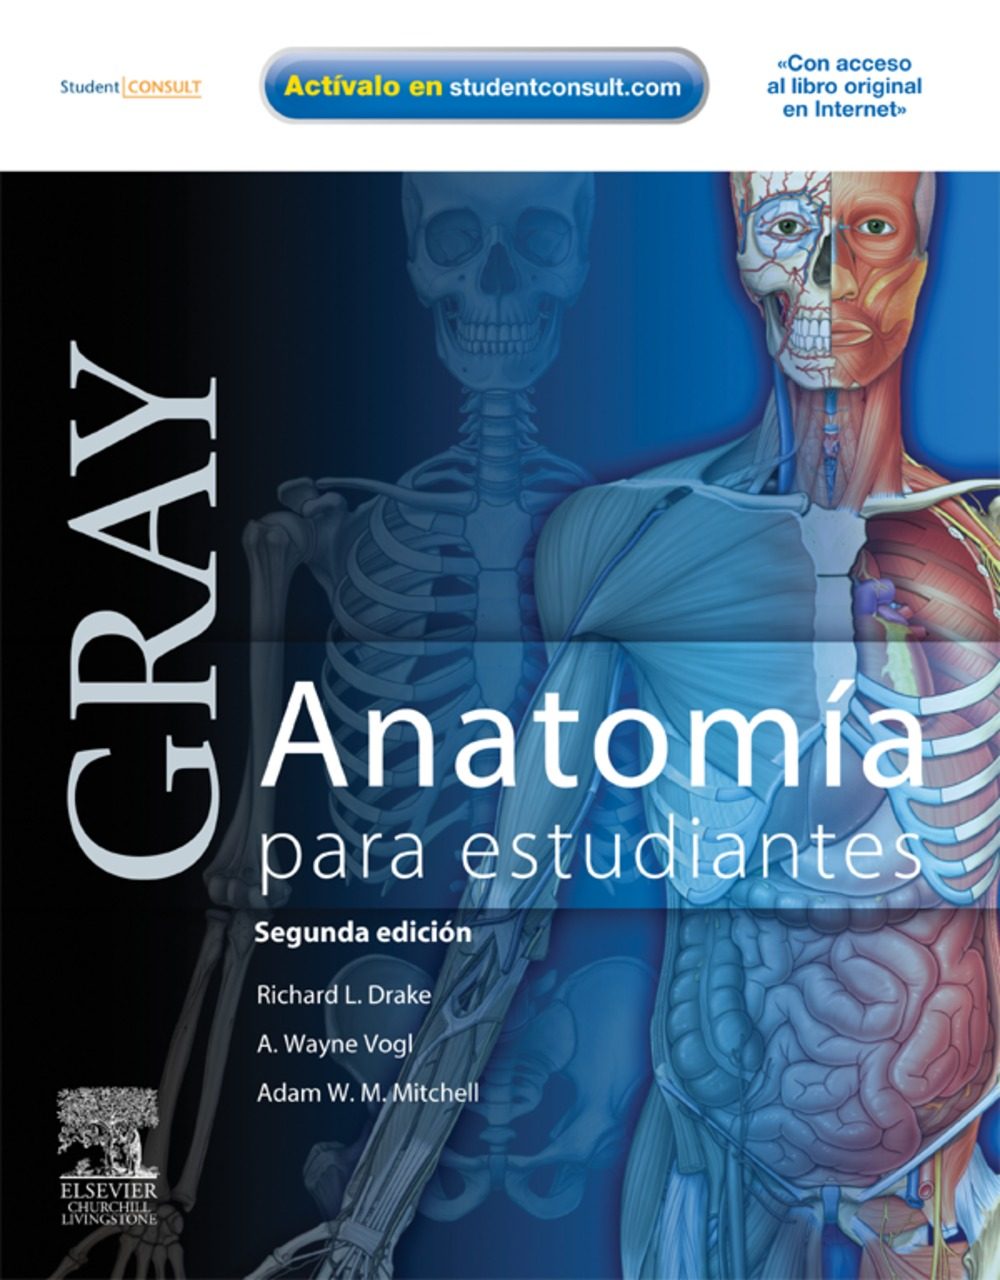 Gray anatomia para estudiantes 2da edicion pdf gratis